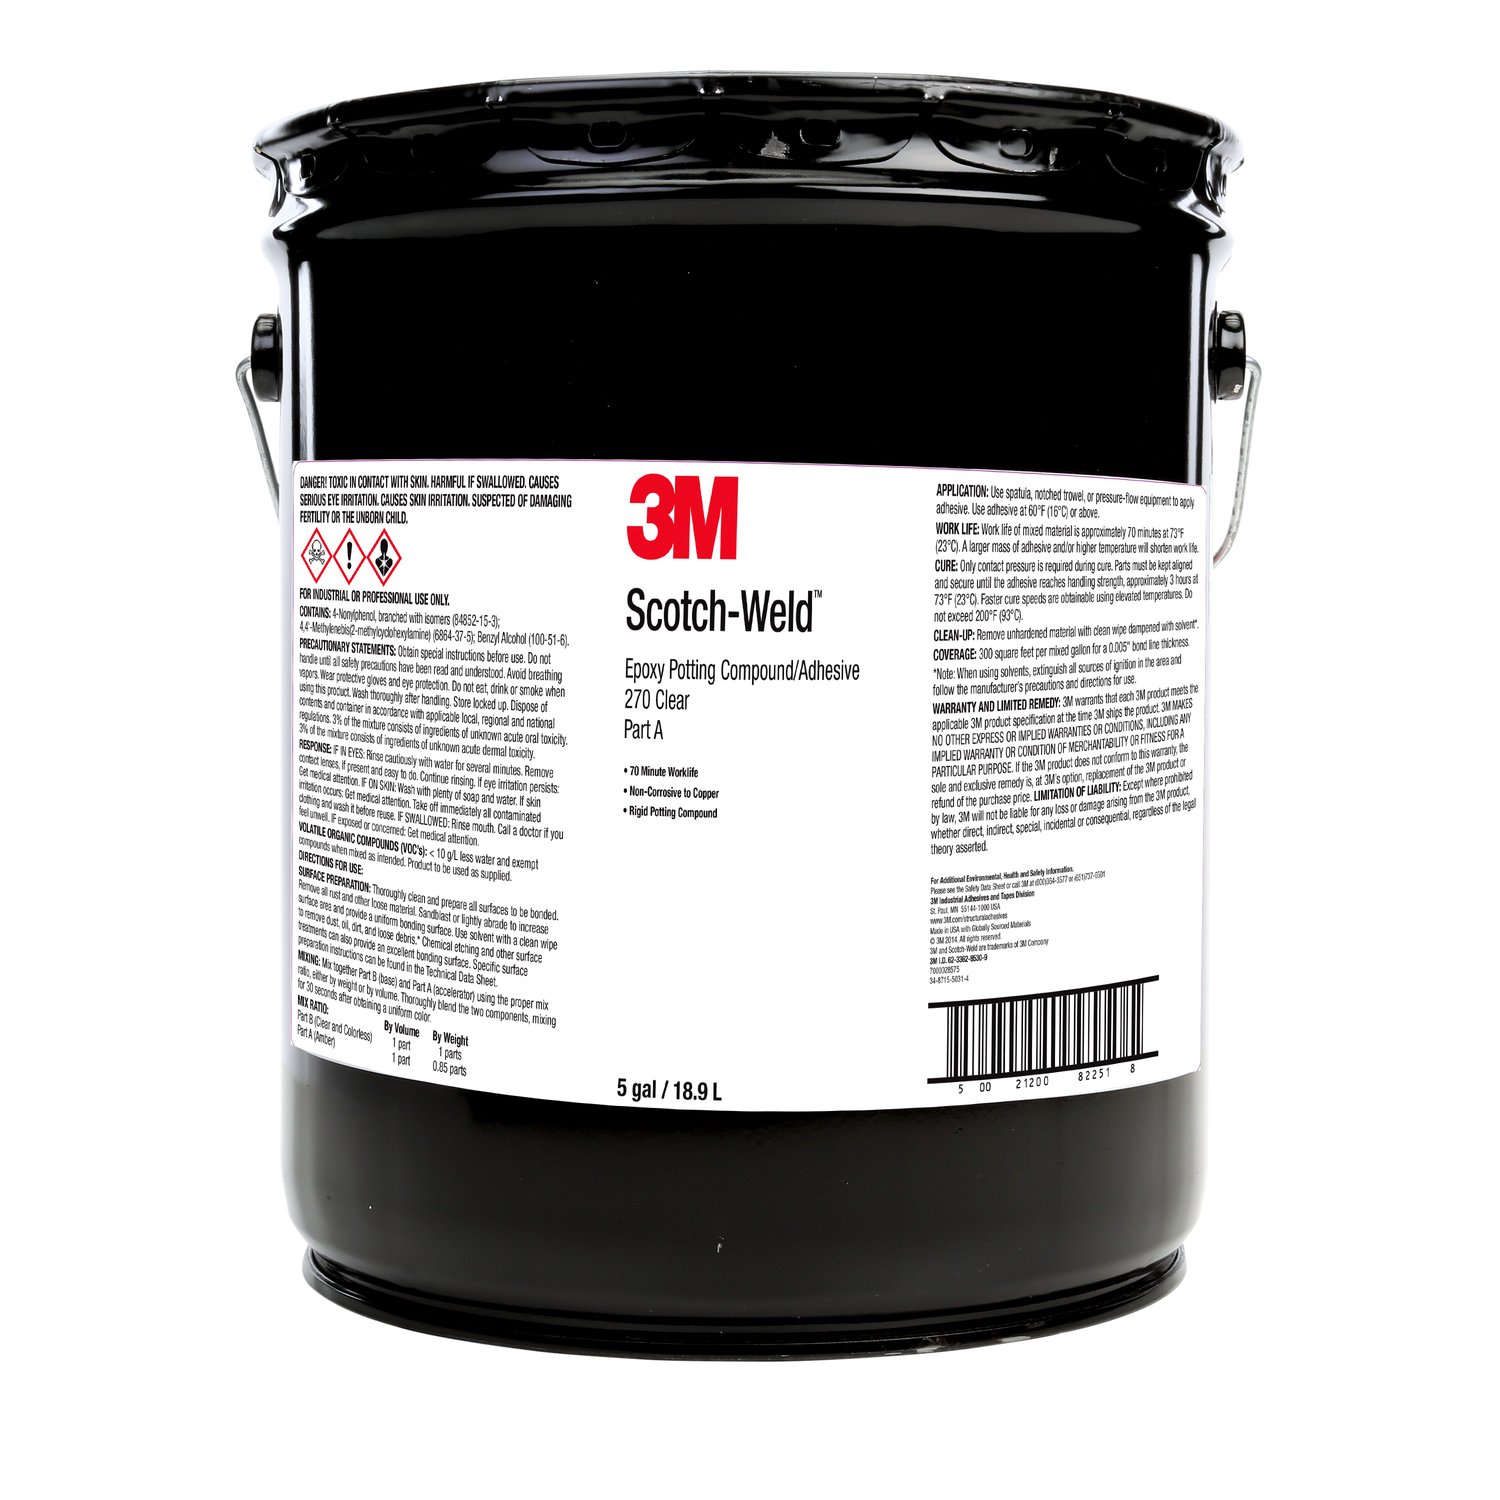 Professional Grade Cyanoacrylate Super Glue by Glue Masters - 16 oz -  Thin Viscosity, Clear 